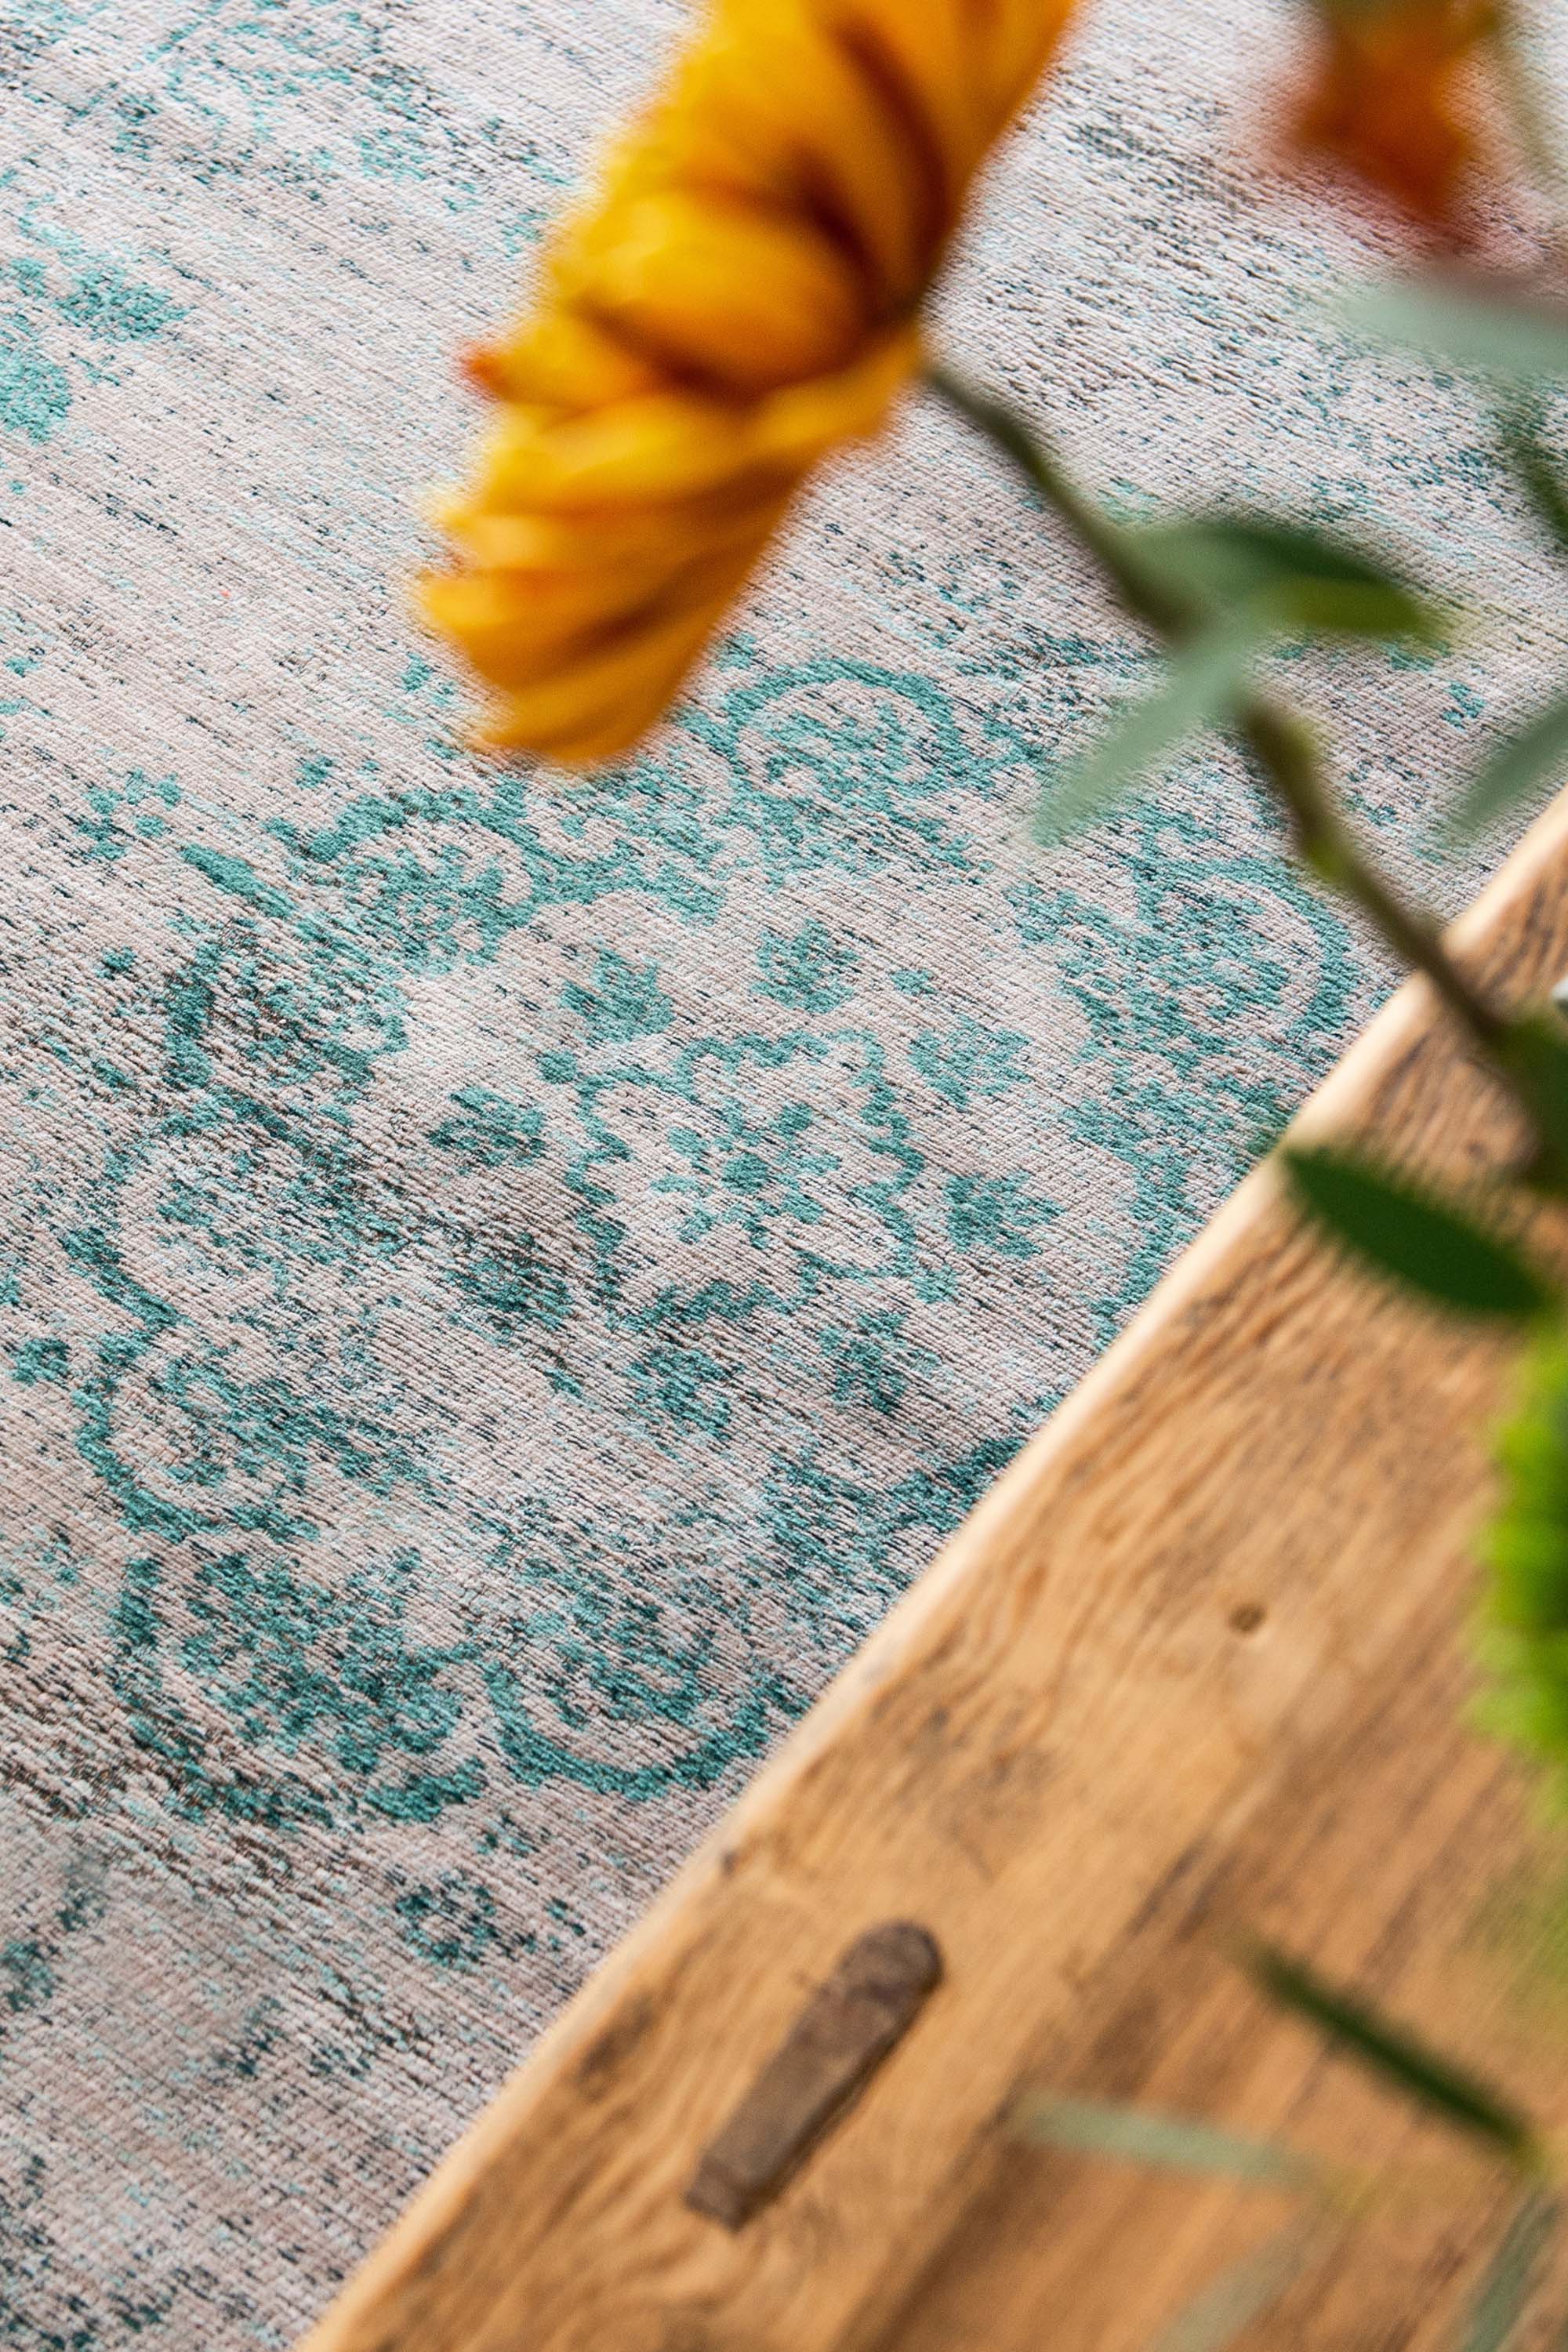 Grey flatweave rug with faded green persian design